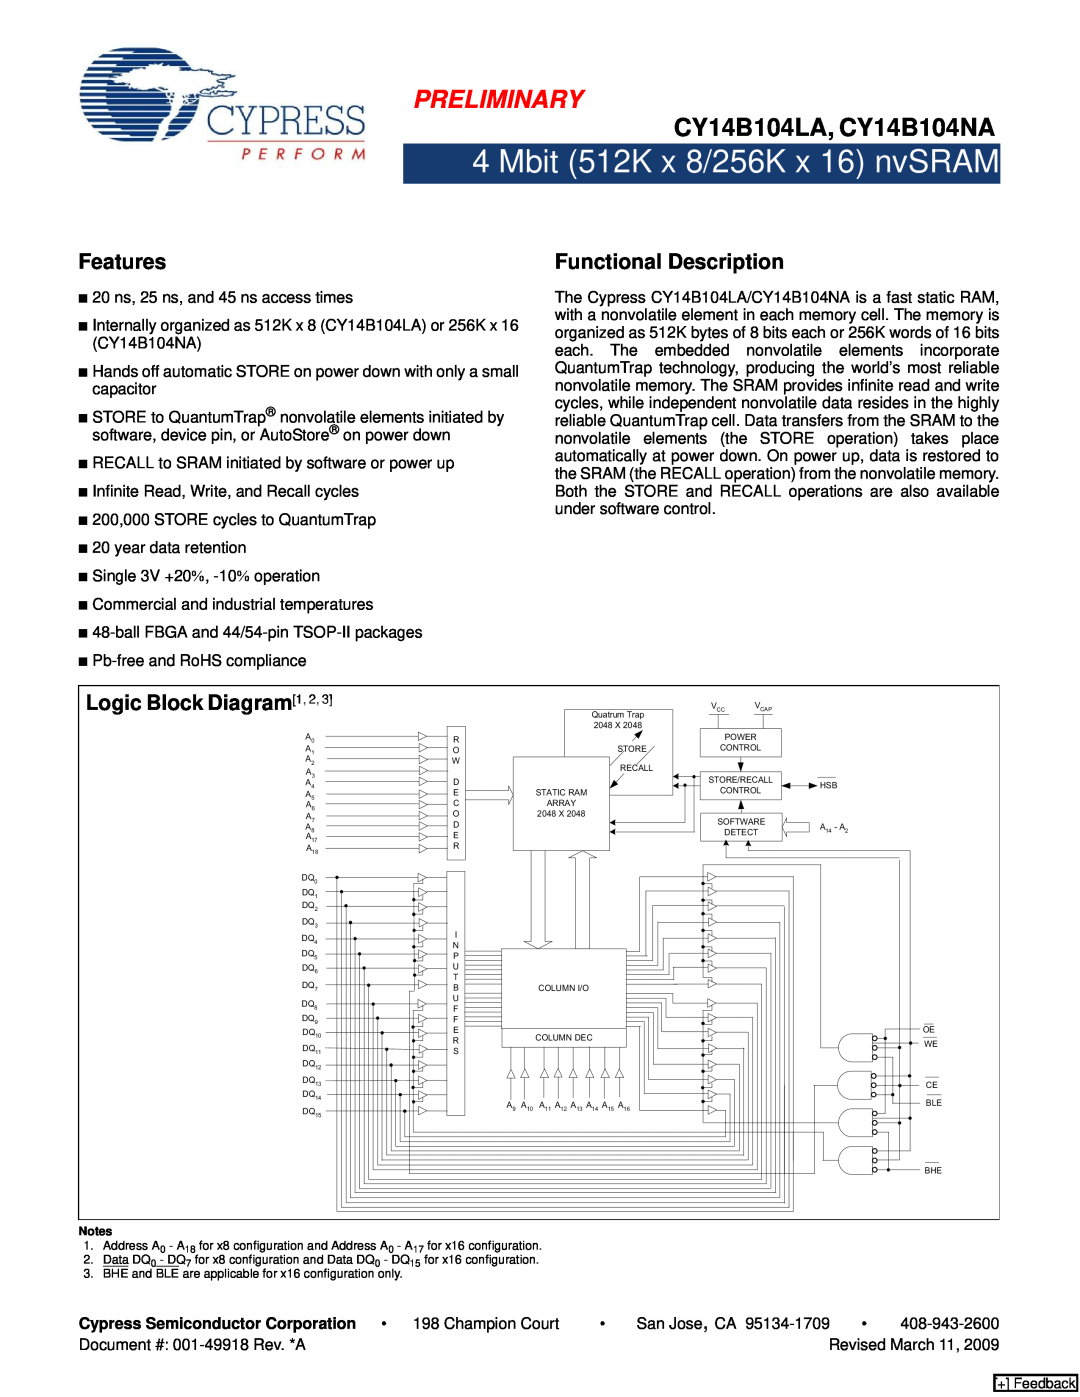 Cypress manual Preliminary, CY14B104LA, CY14B104NA, Features, Functional Description, Logic Block Diagram1, 2 